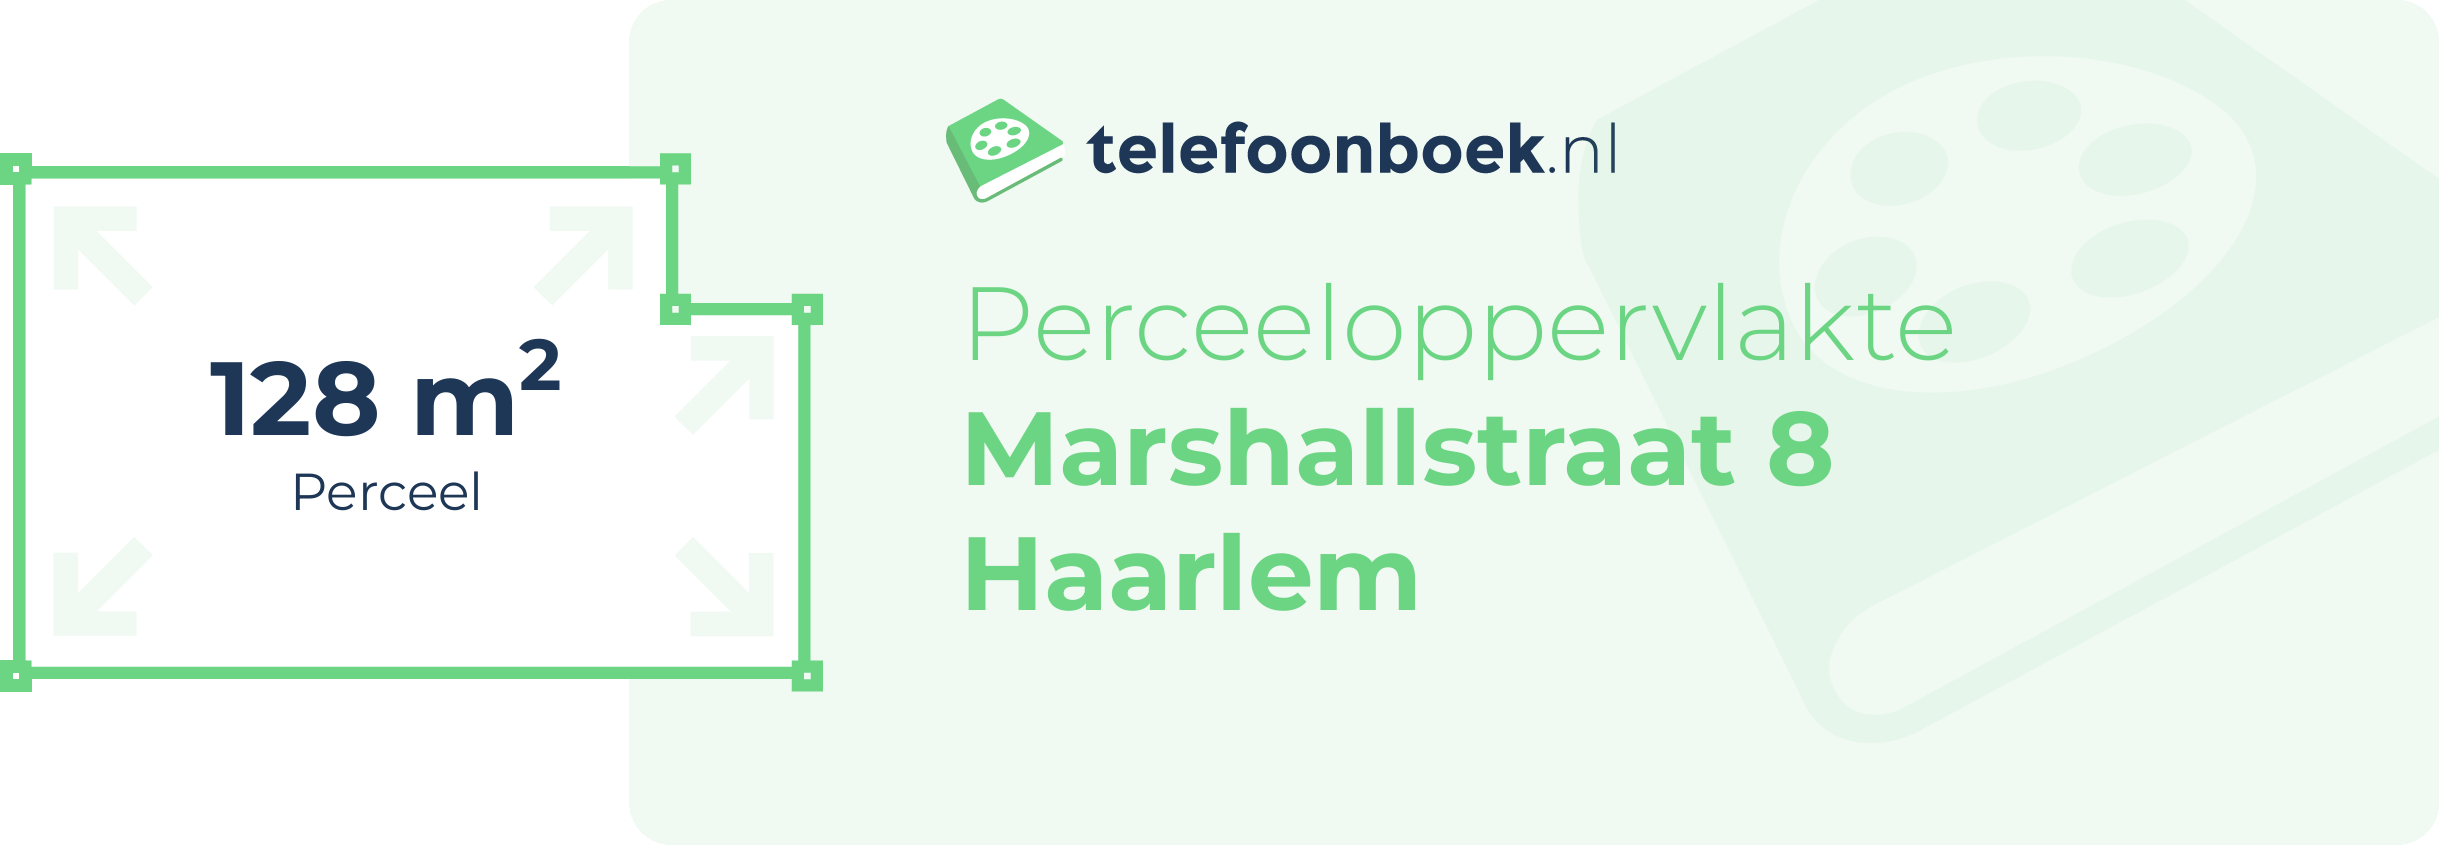 Perceeloppervlakte Marshallstraat 8 Haarlem